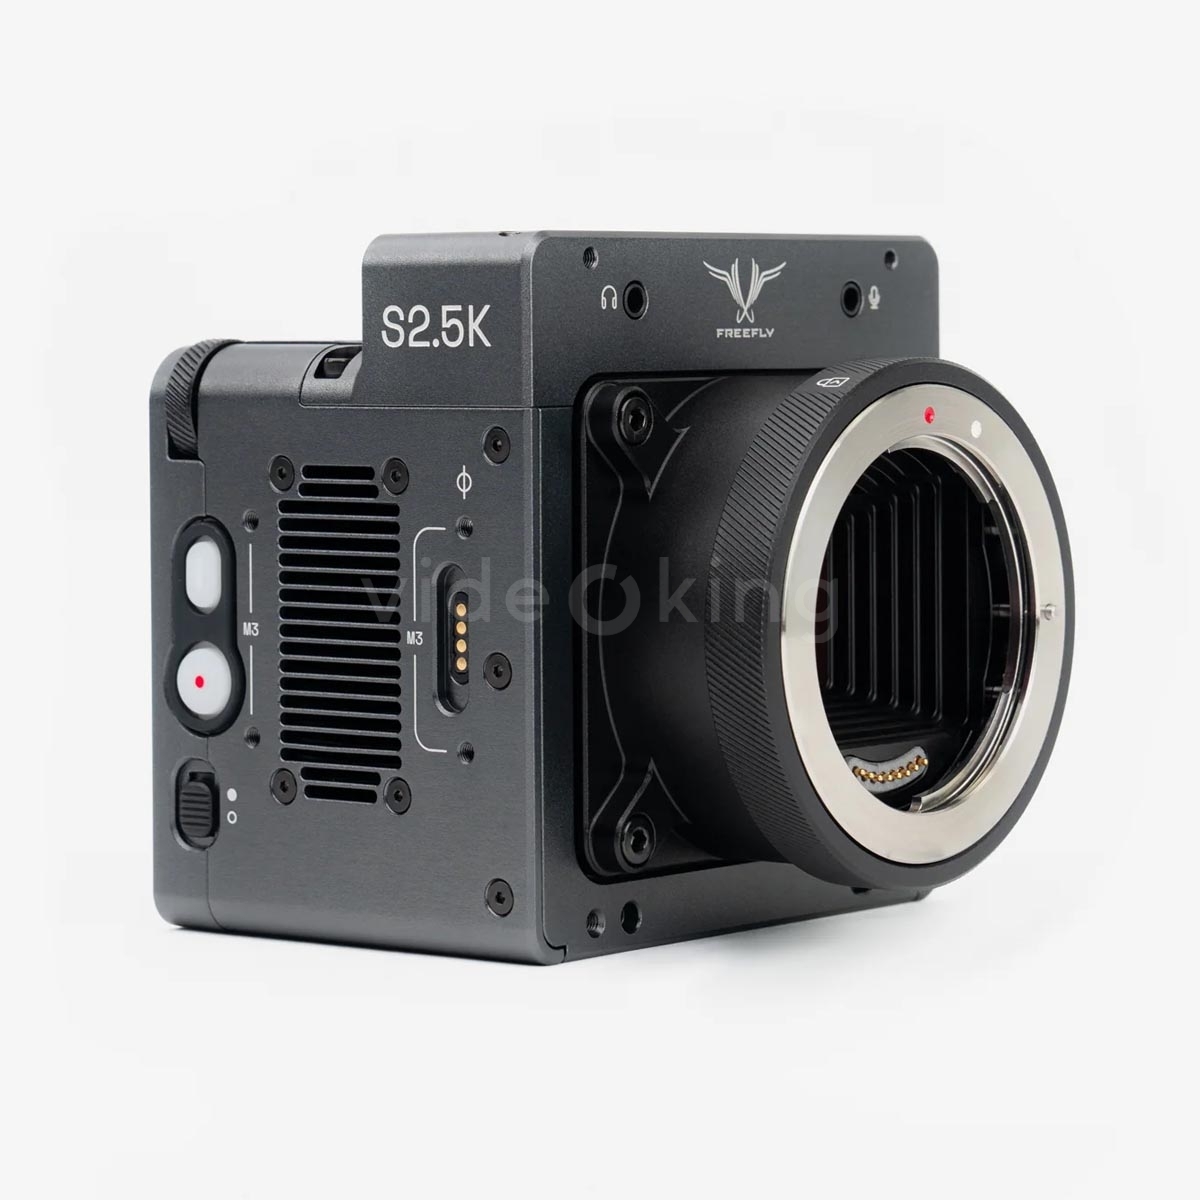 Freefly Ember S2.5K Super Slow Motion Camera